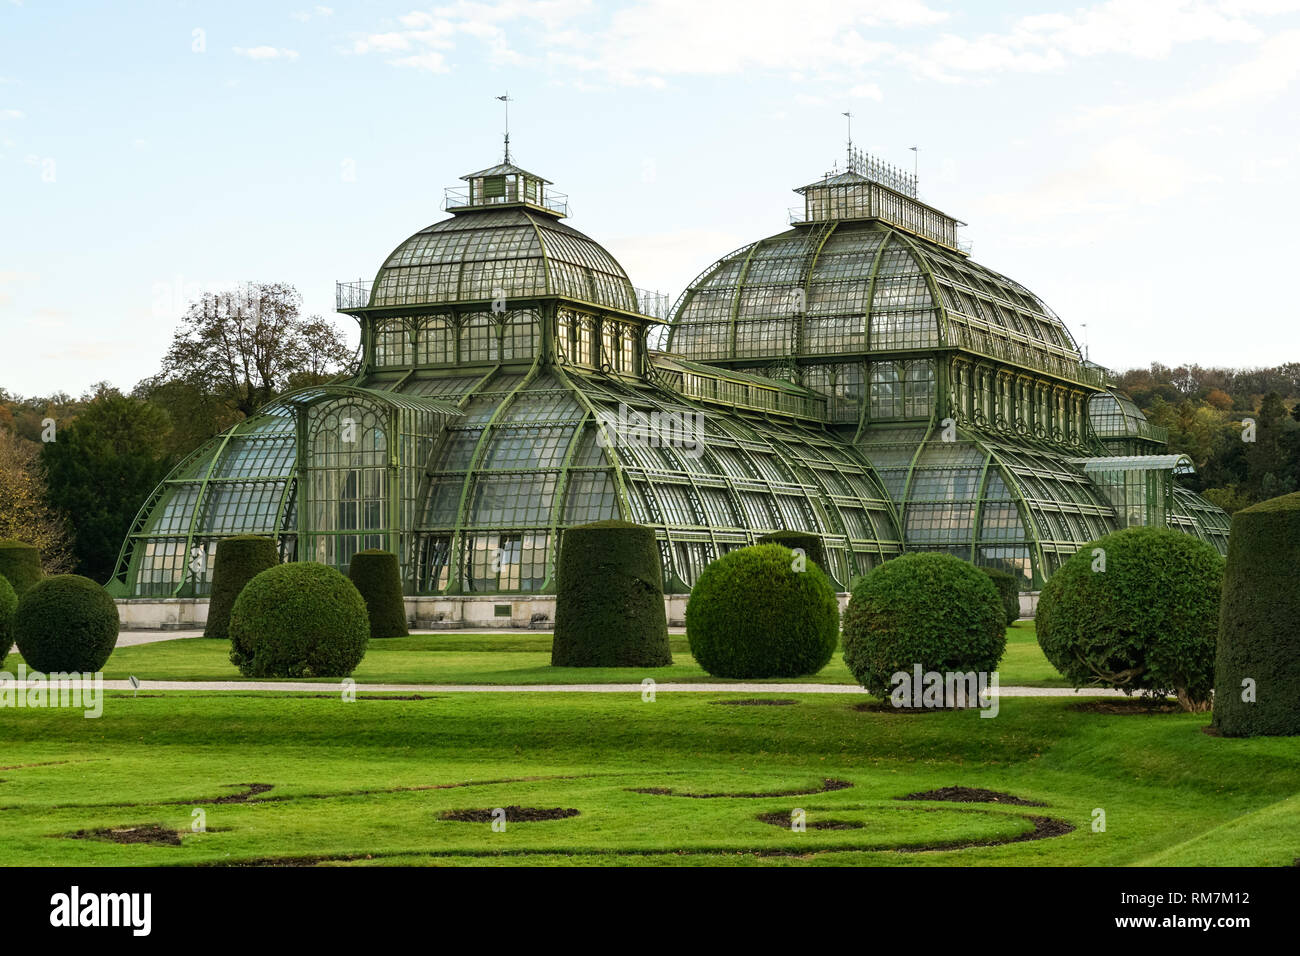 The Palm House in the Schönbrunn Palace gardens in Vienna, Austria Stock Photo